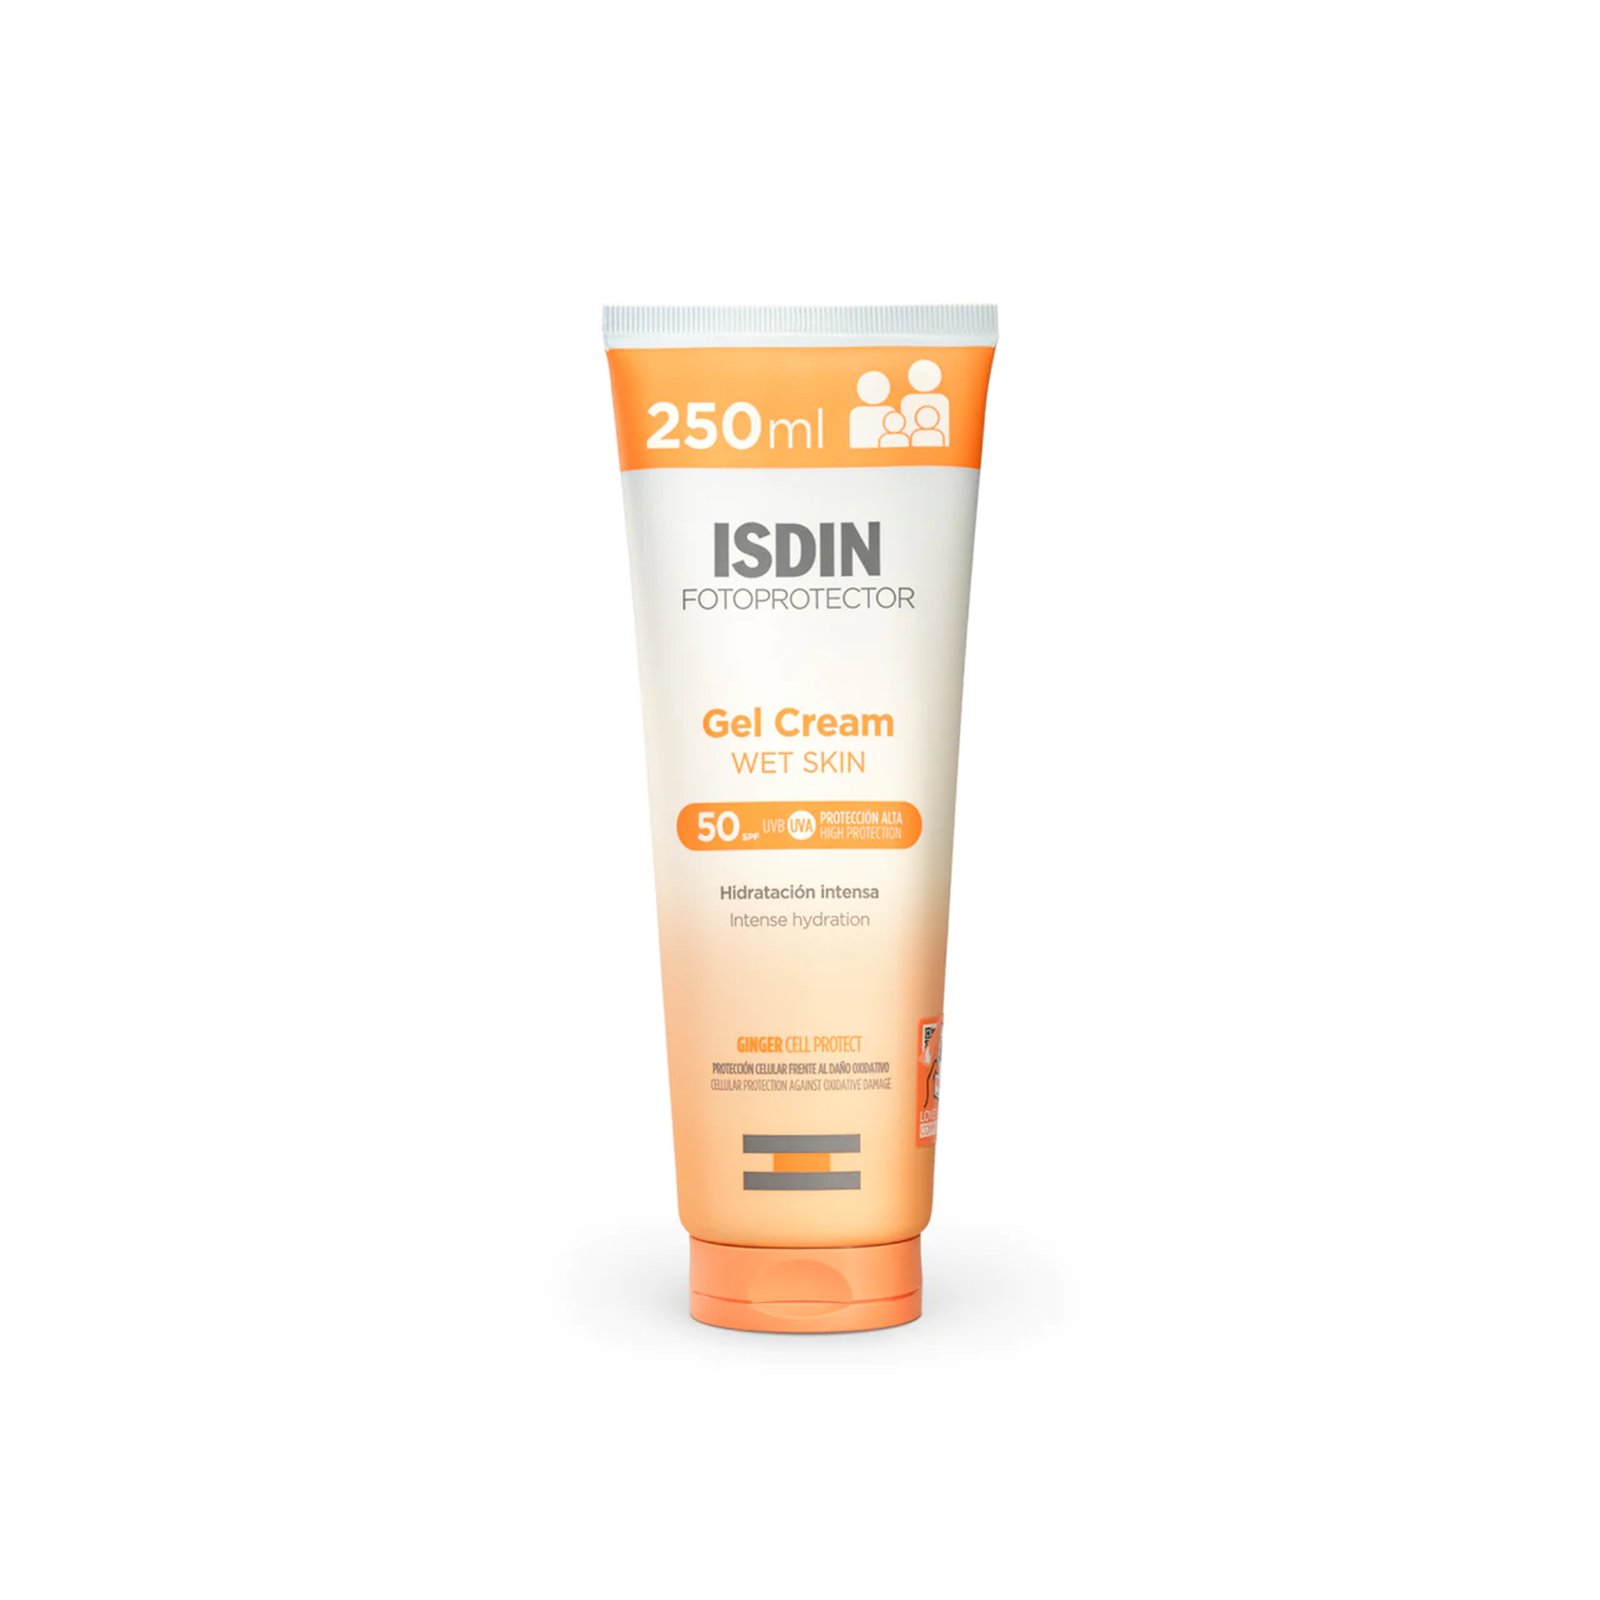 ISDIN Fotoprotector Gel Cream SPF50+ 250ml (8.45floz)